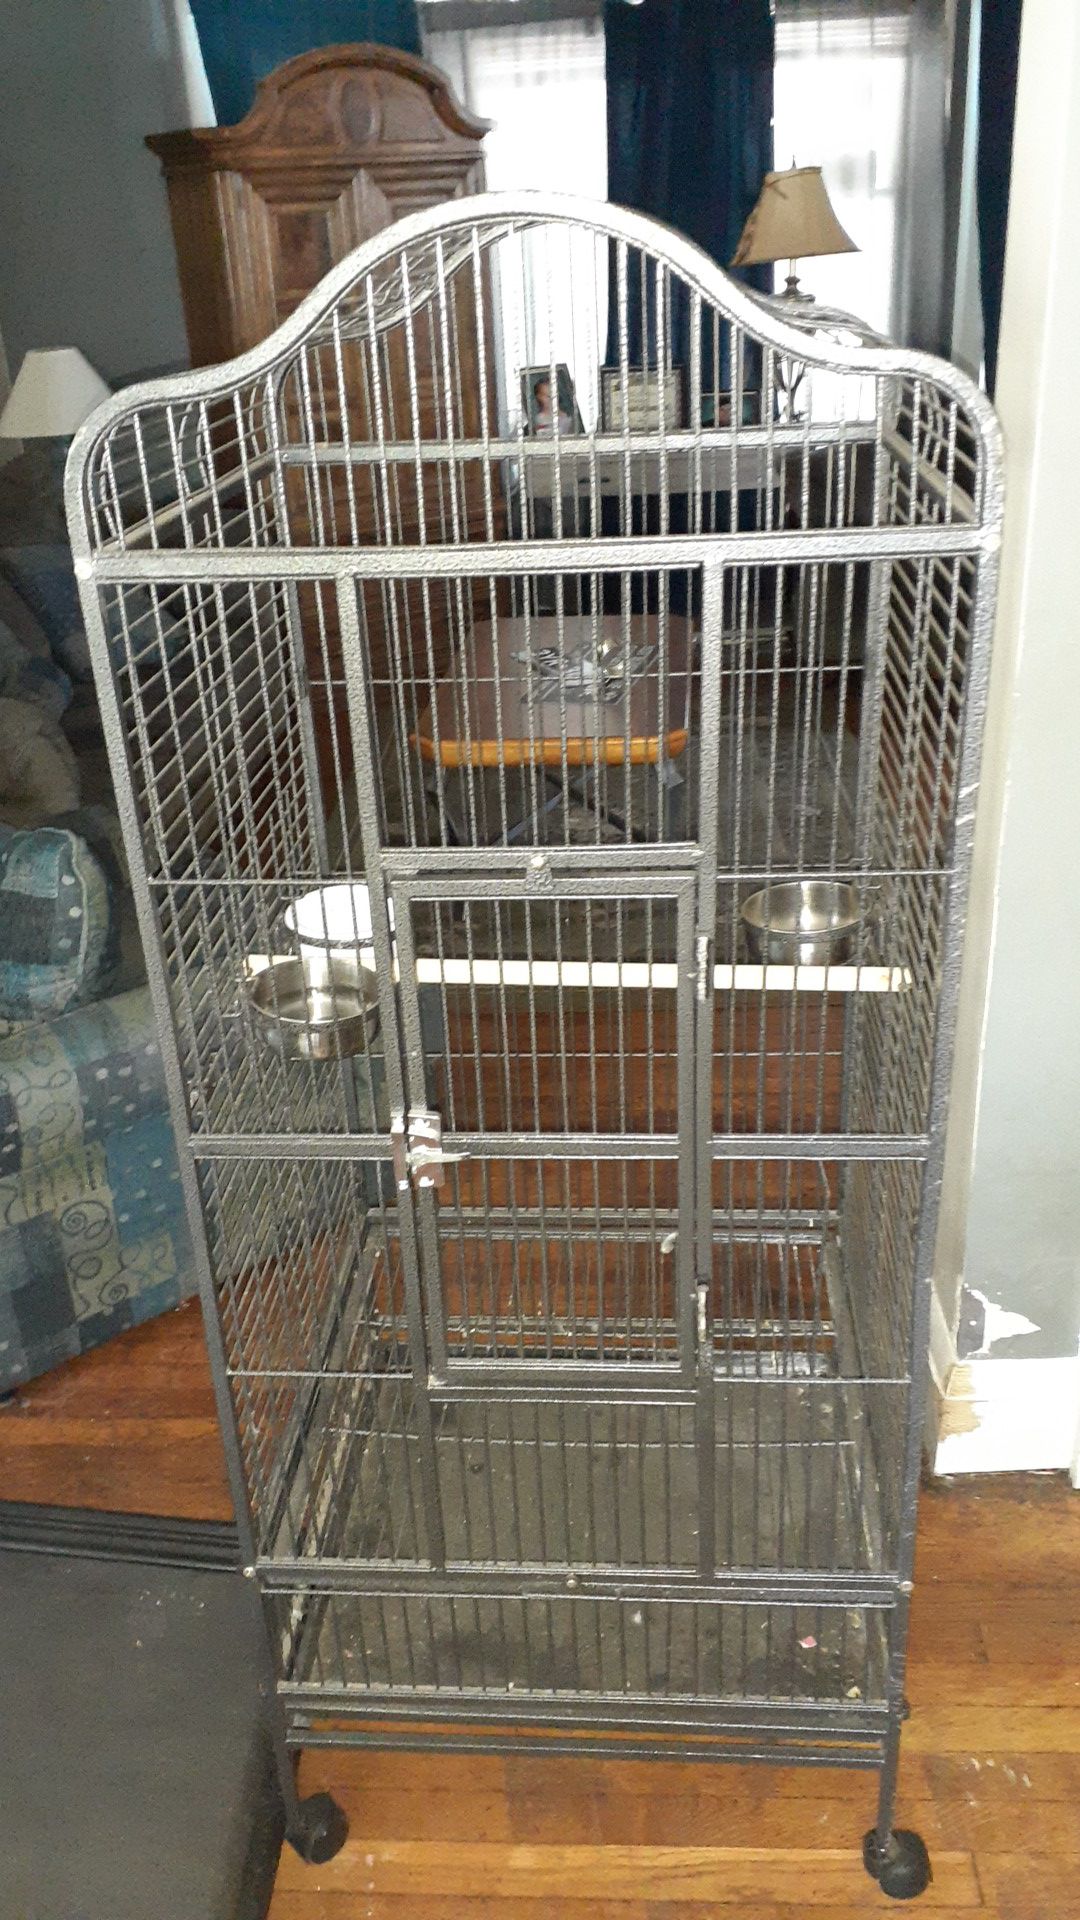 Real nice bird cage